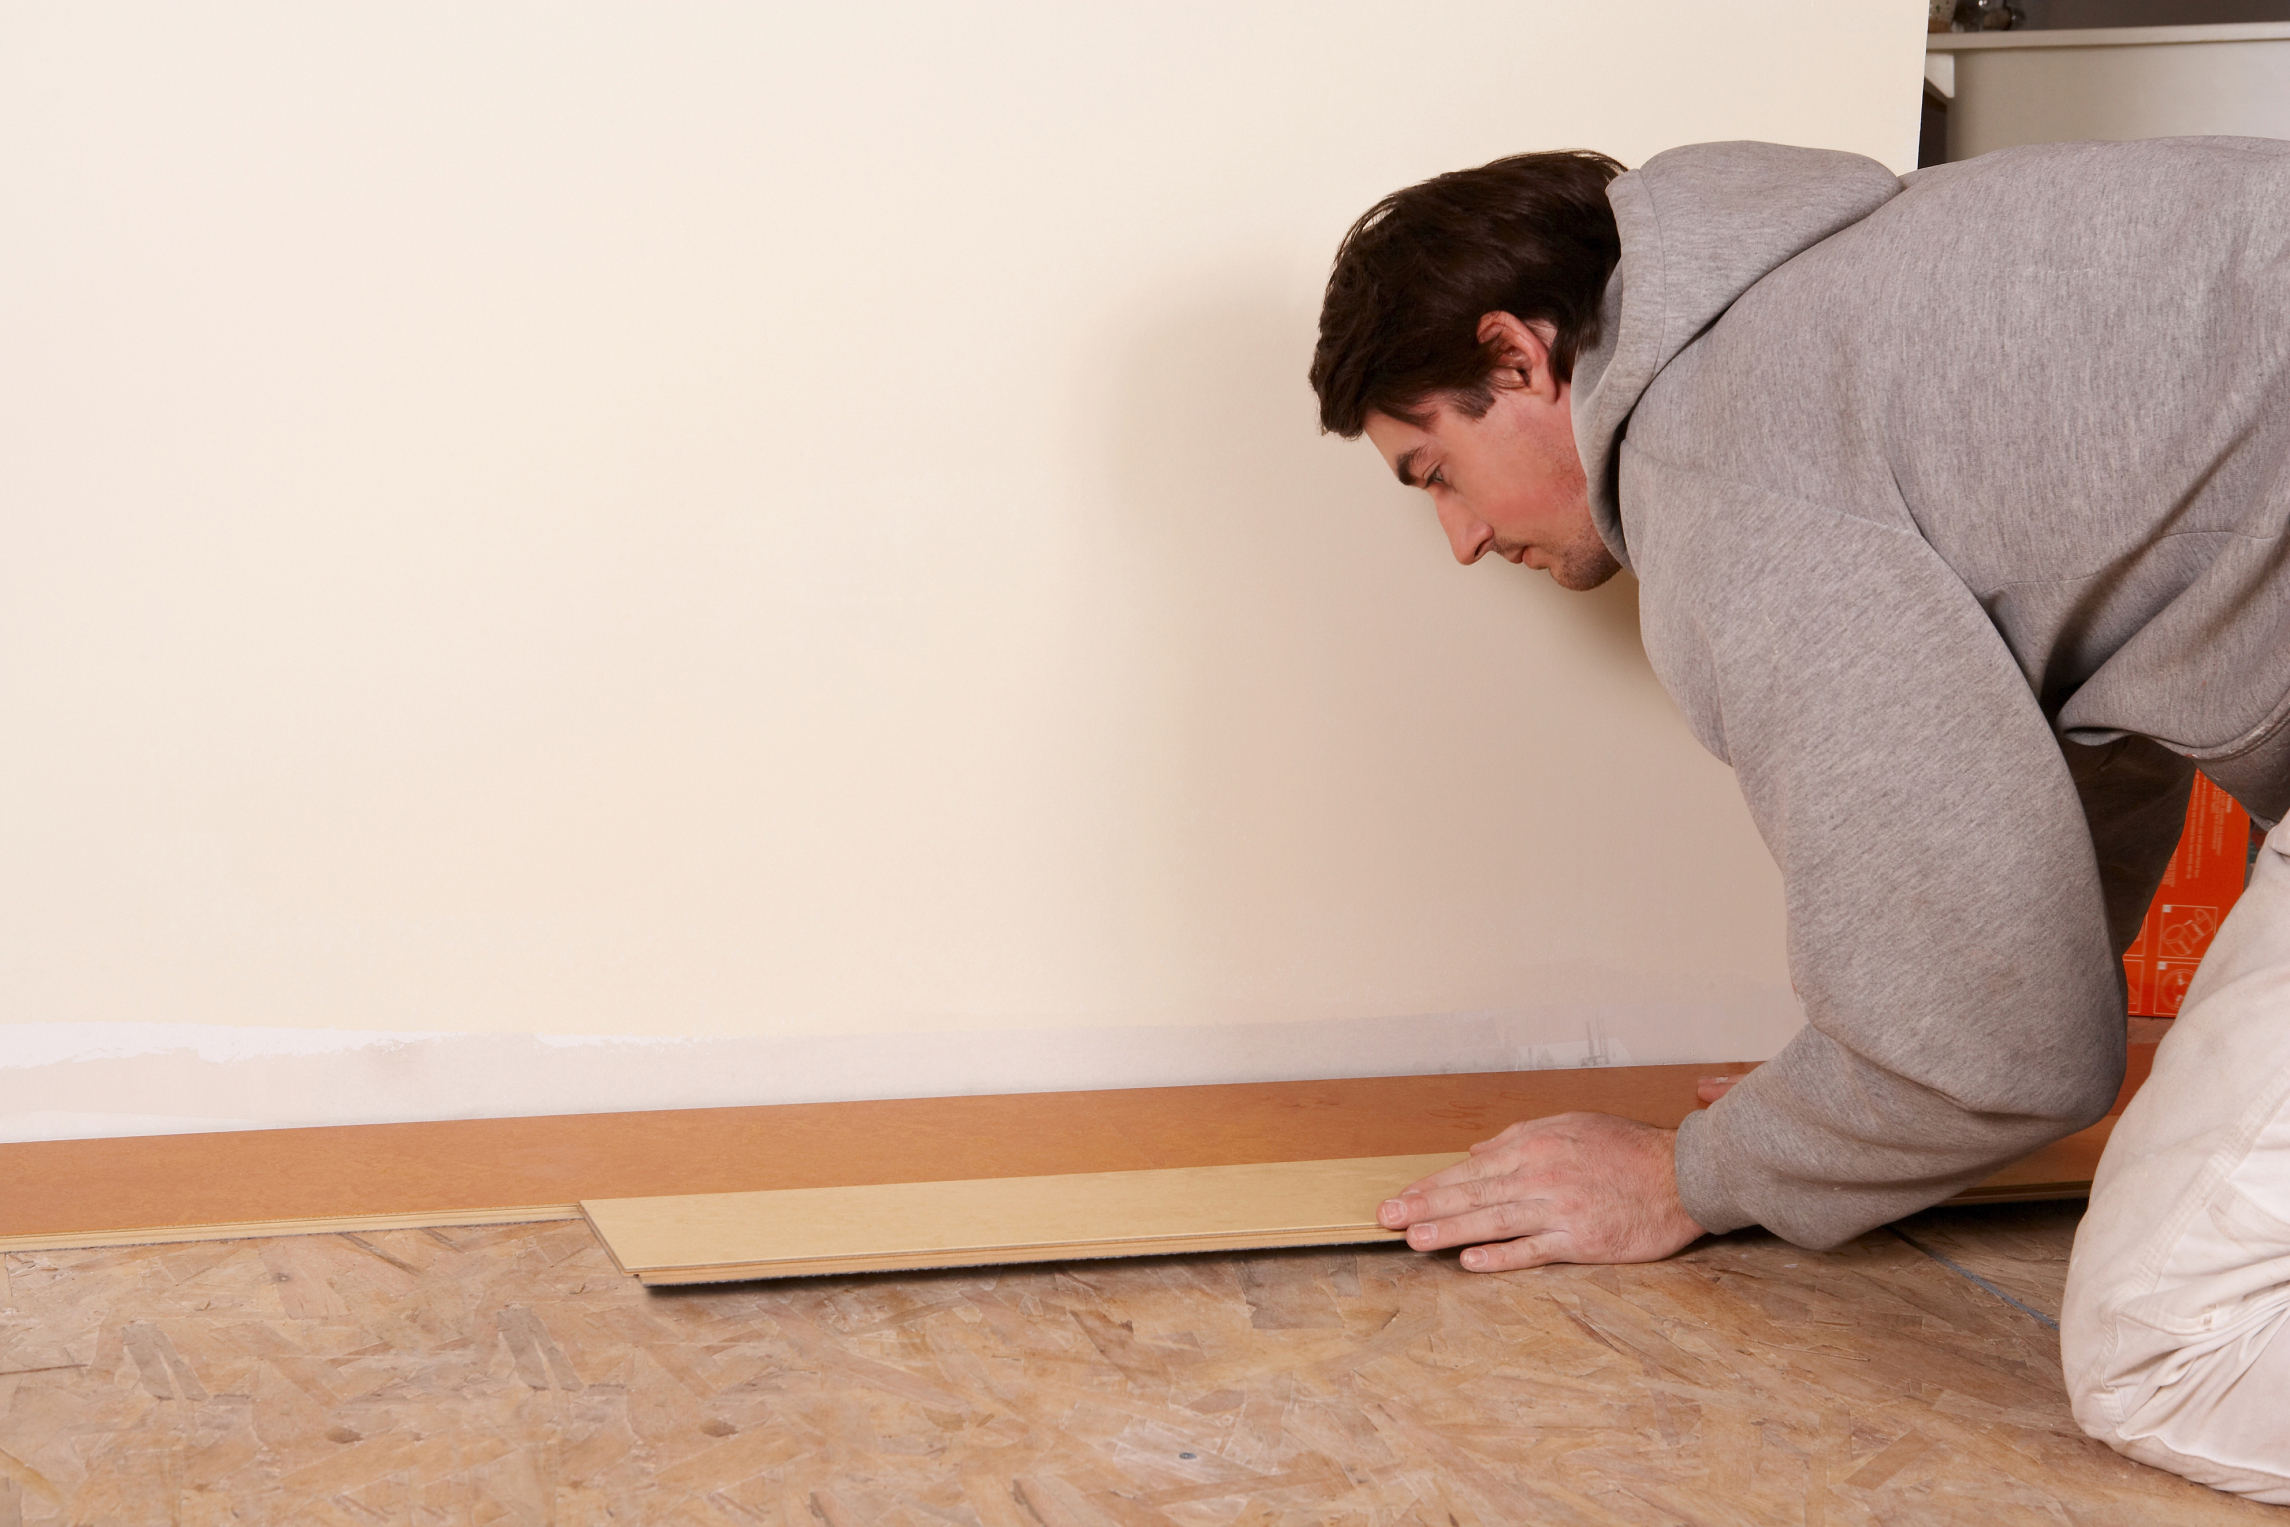 How To Seal Laminate Flooring Edges